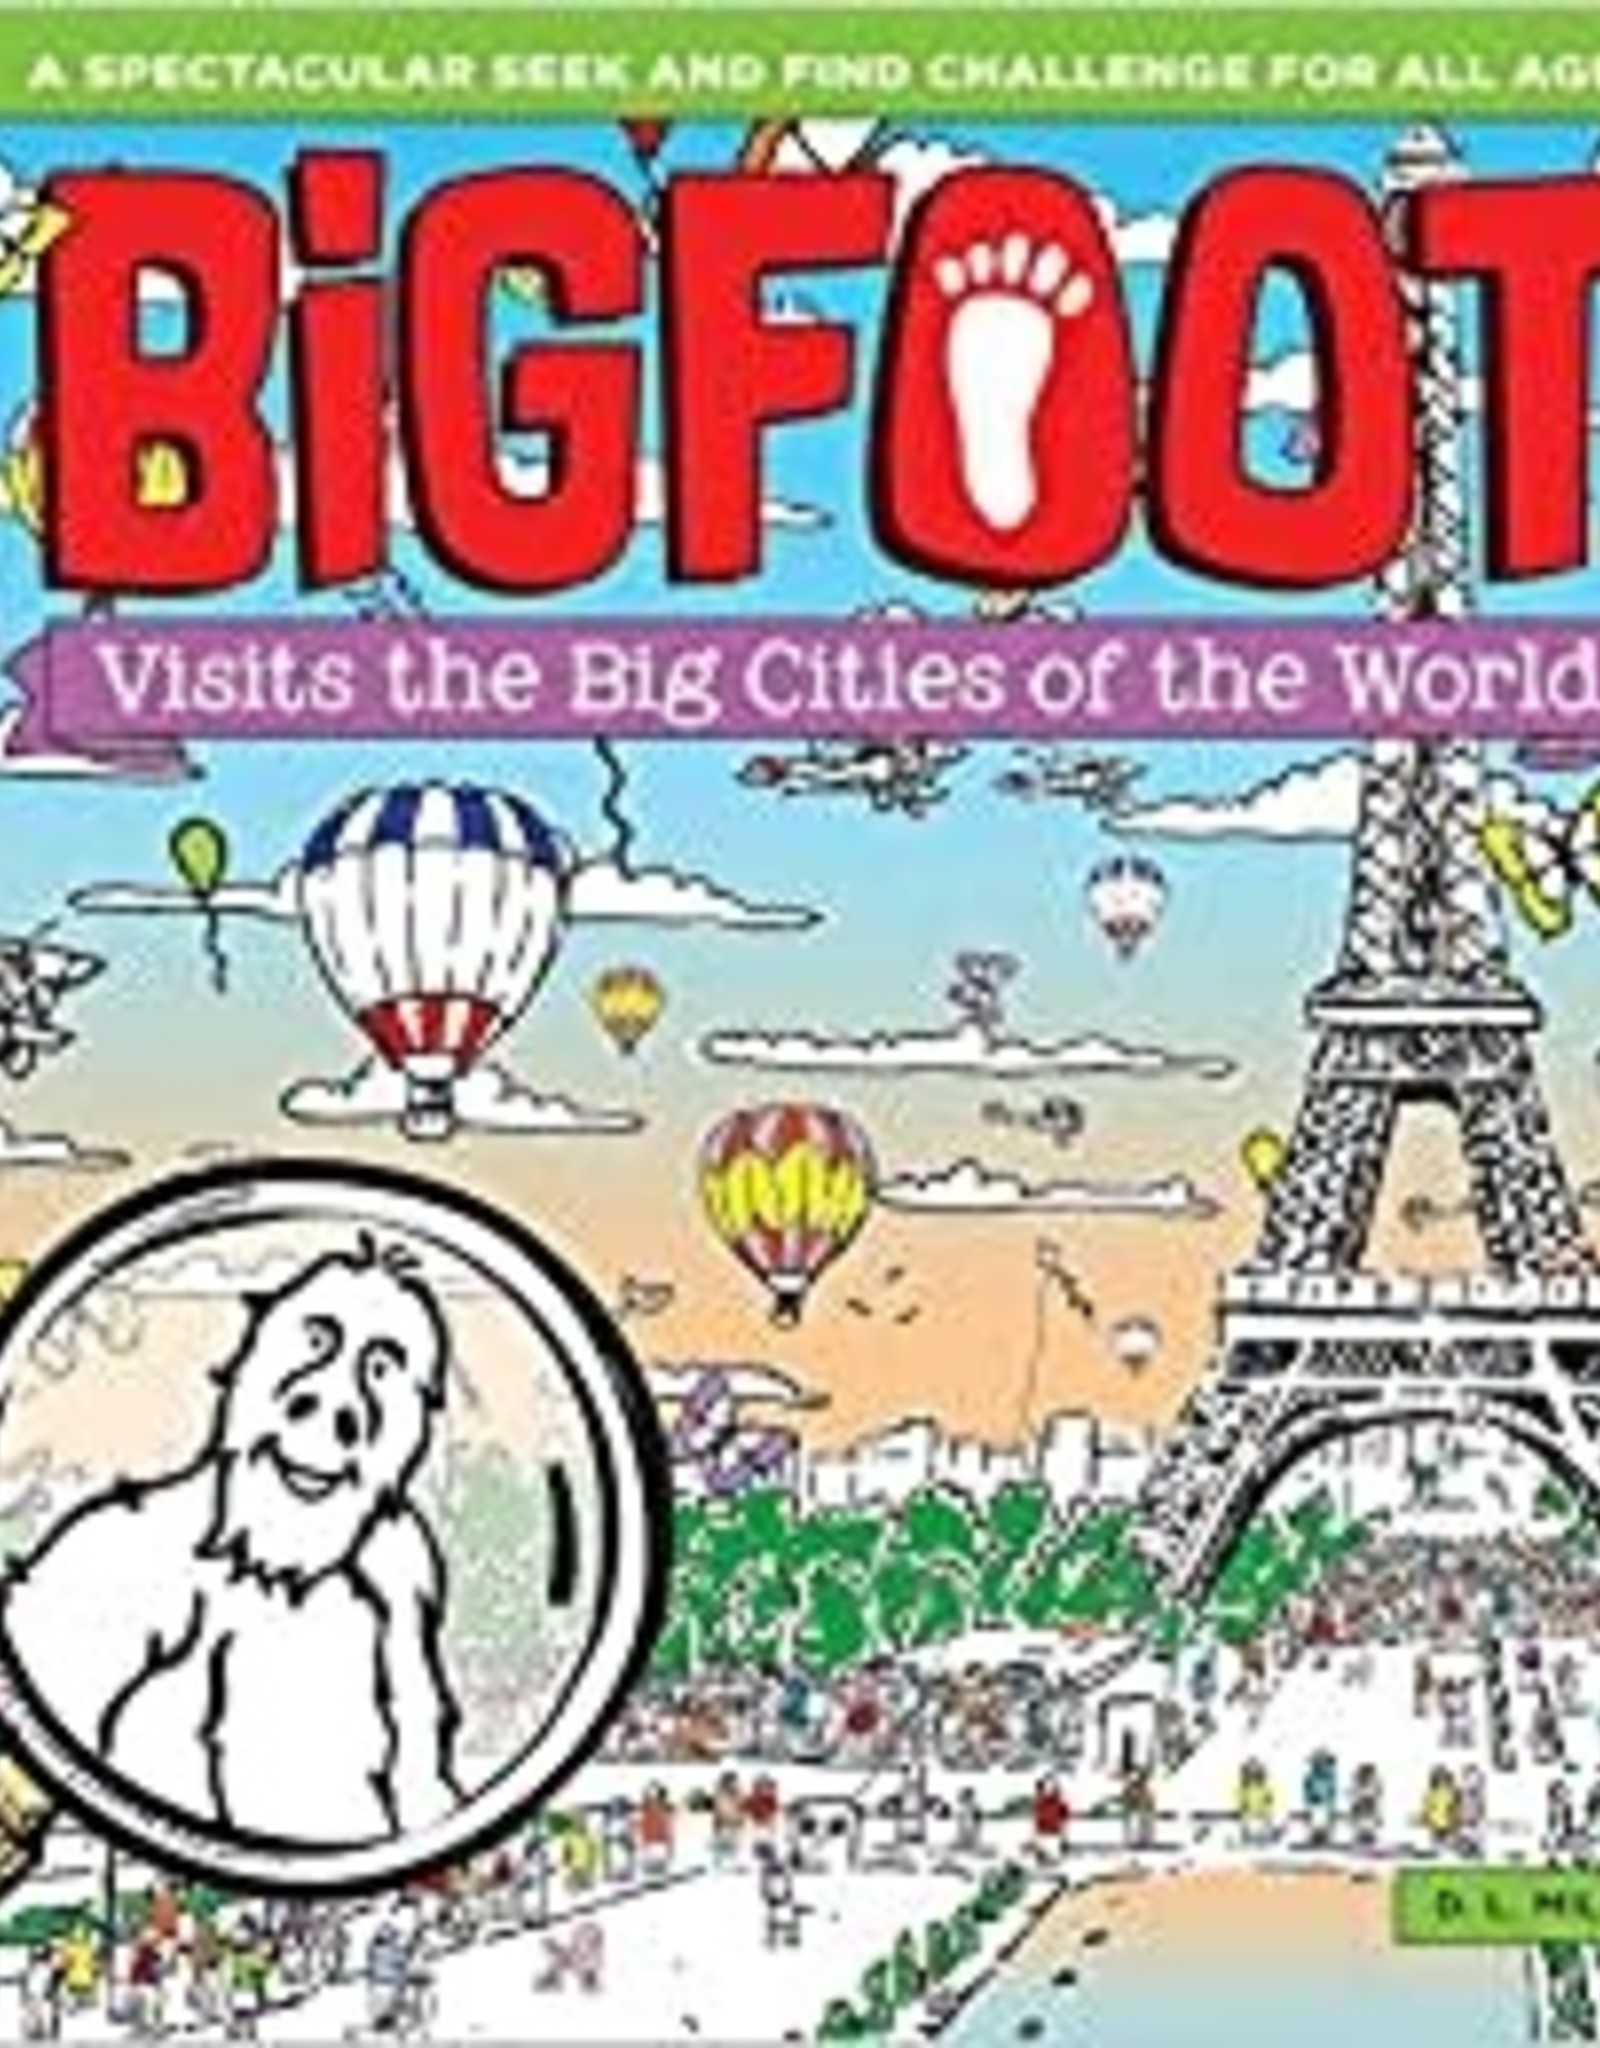 BigFoot Visits Big Cities of The World